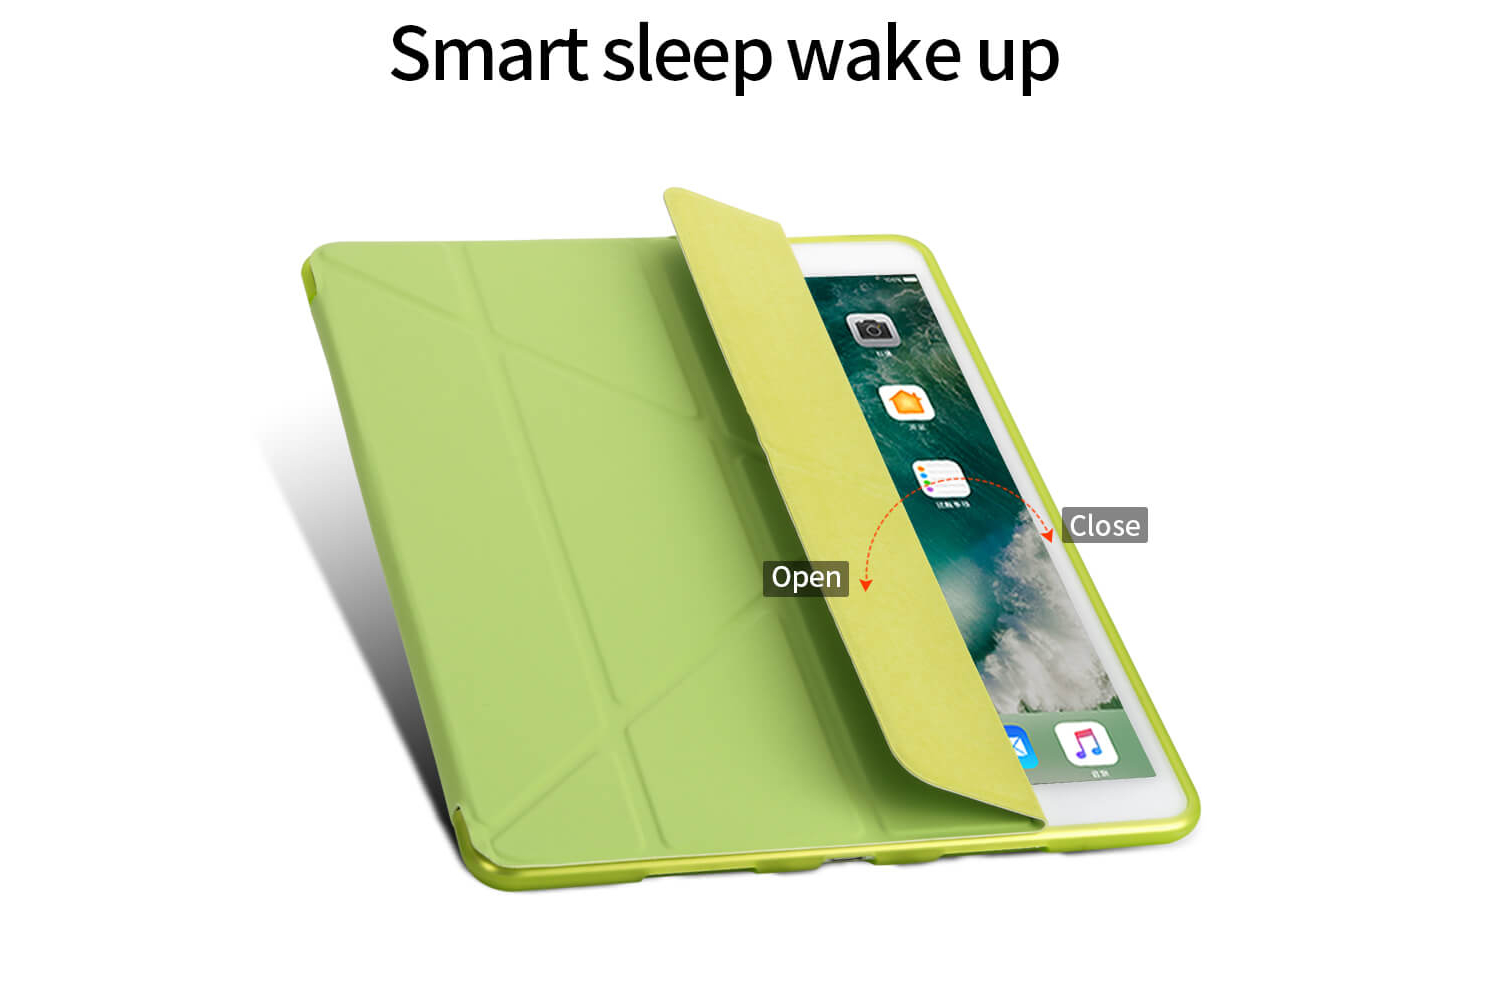 Flipstand Cover iPad Pro 10.5 groen 